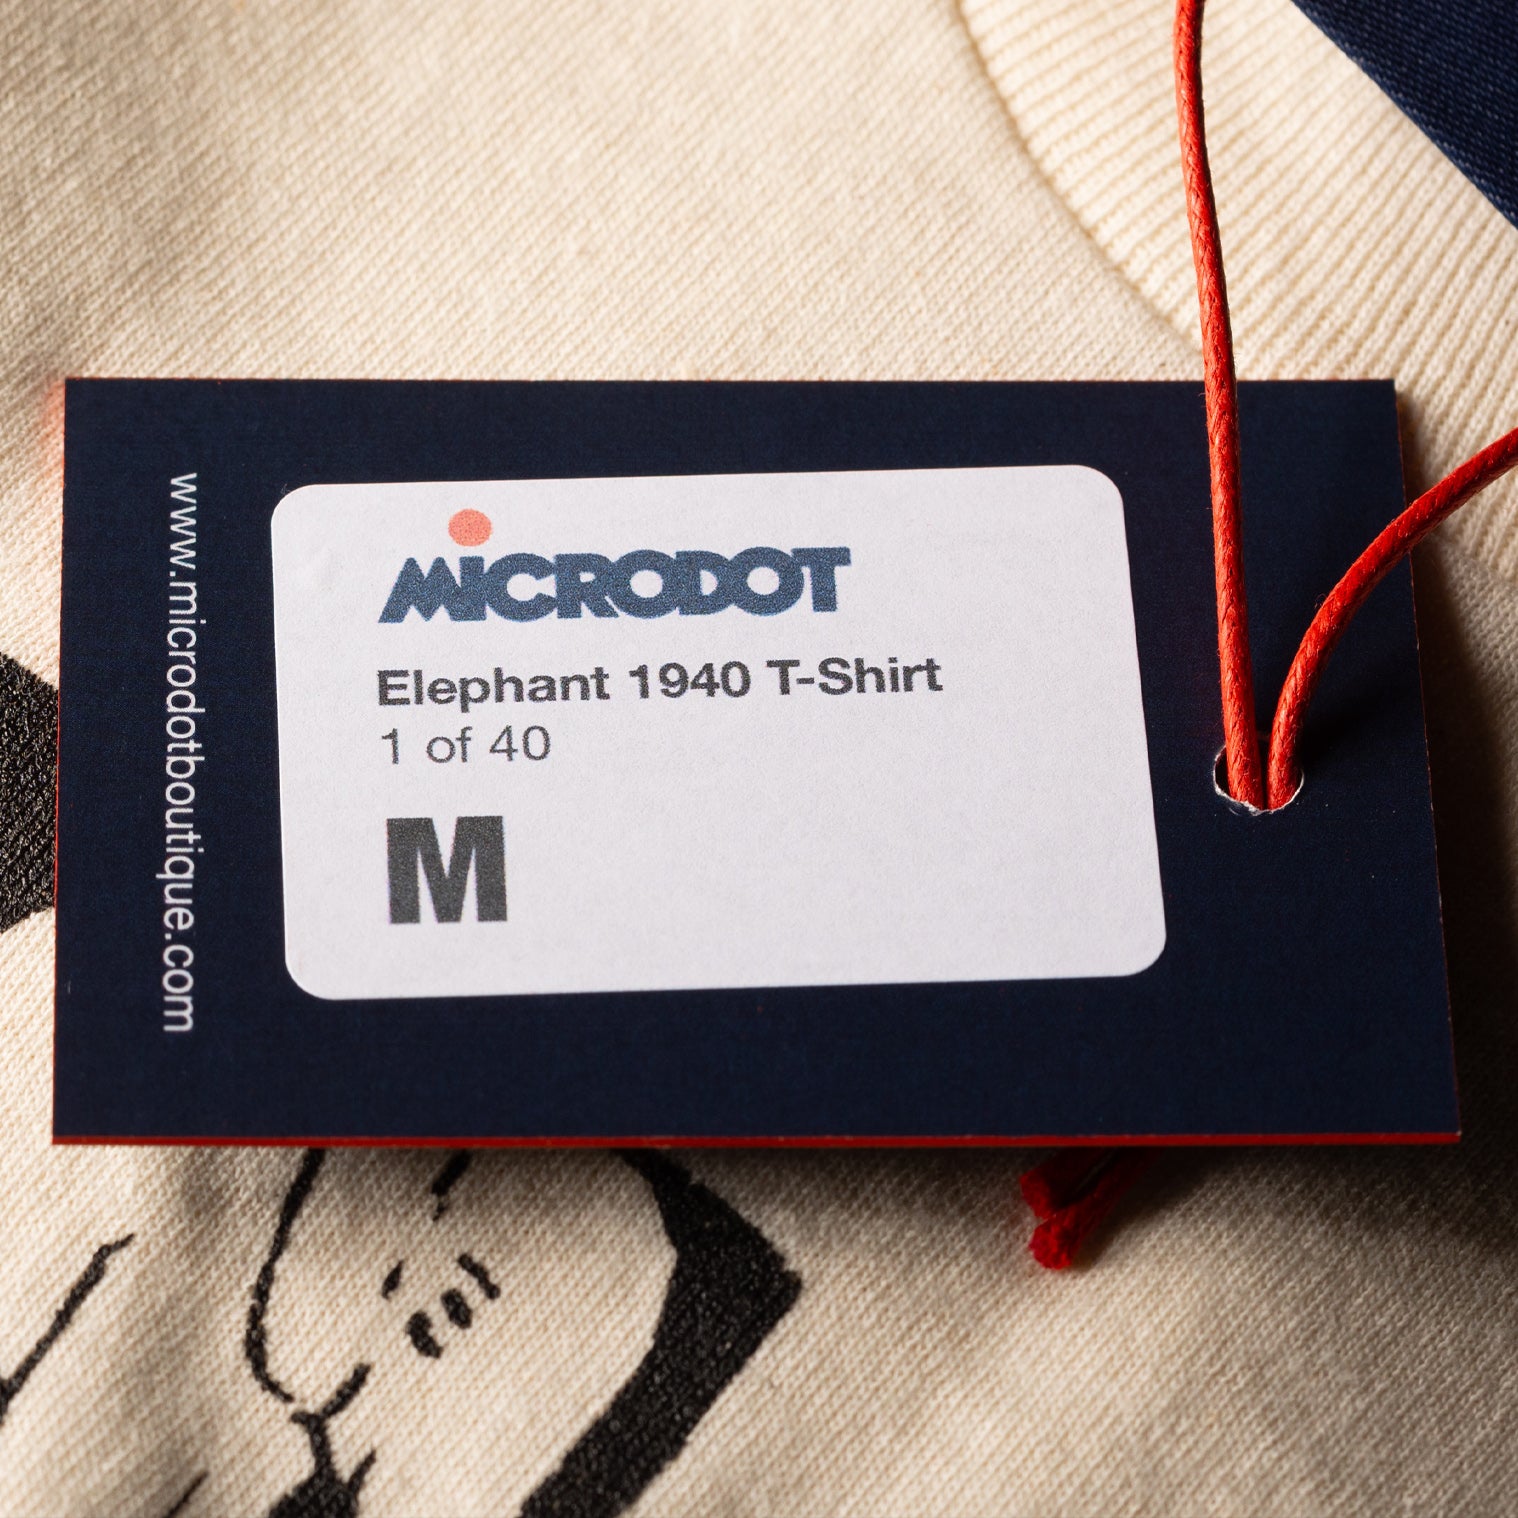 Microdot - Elephant 1940 T Shirt - New Item